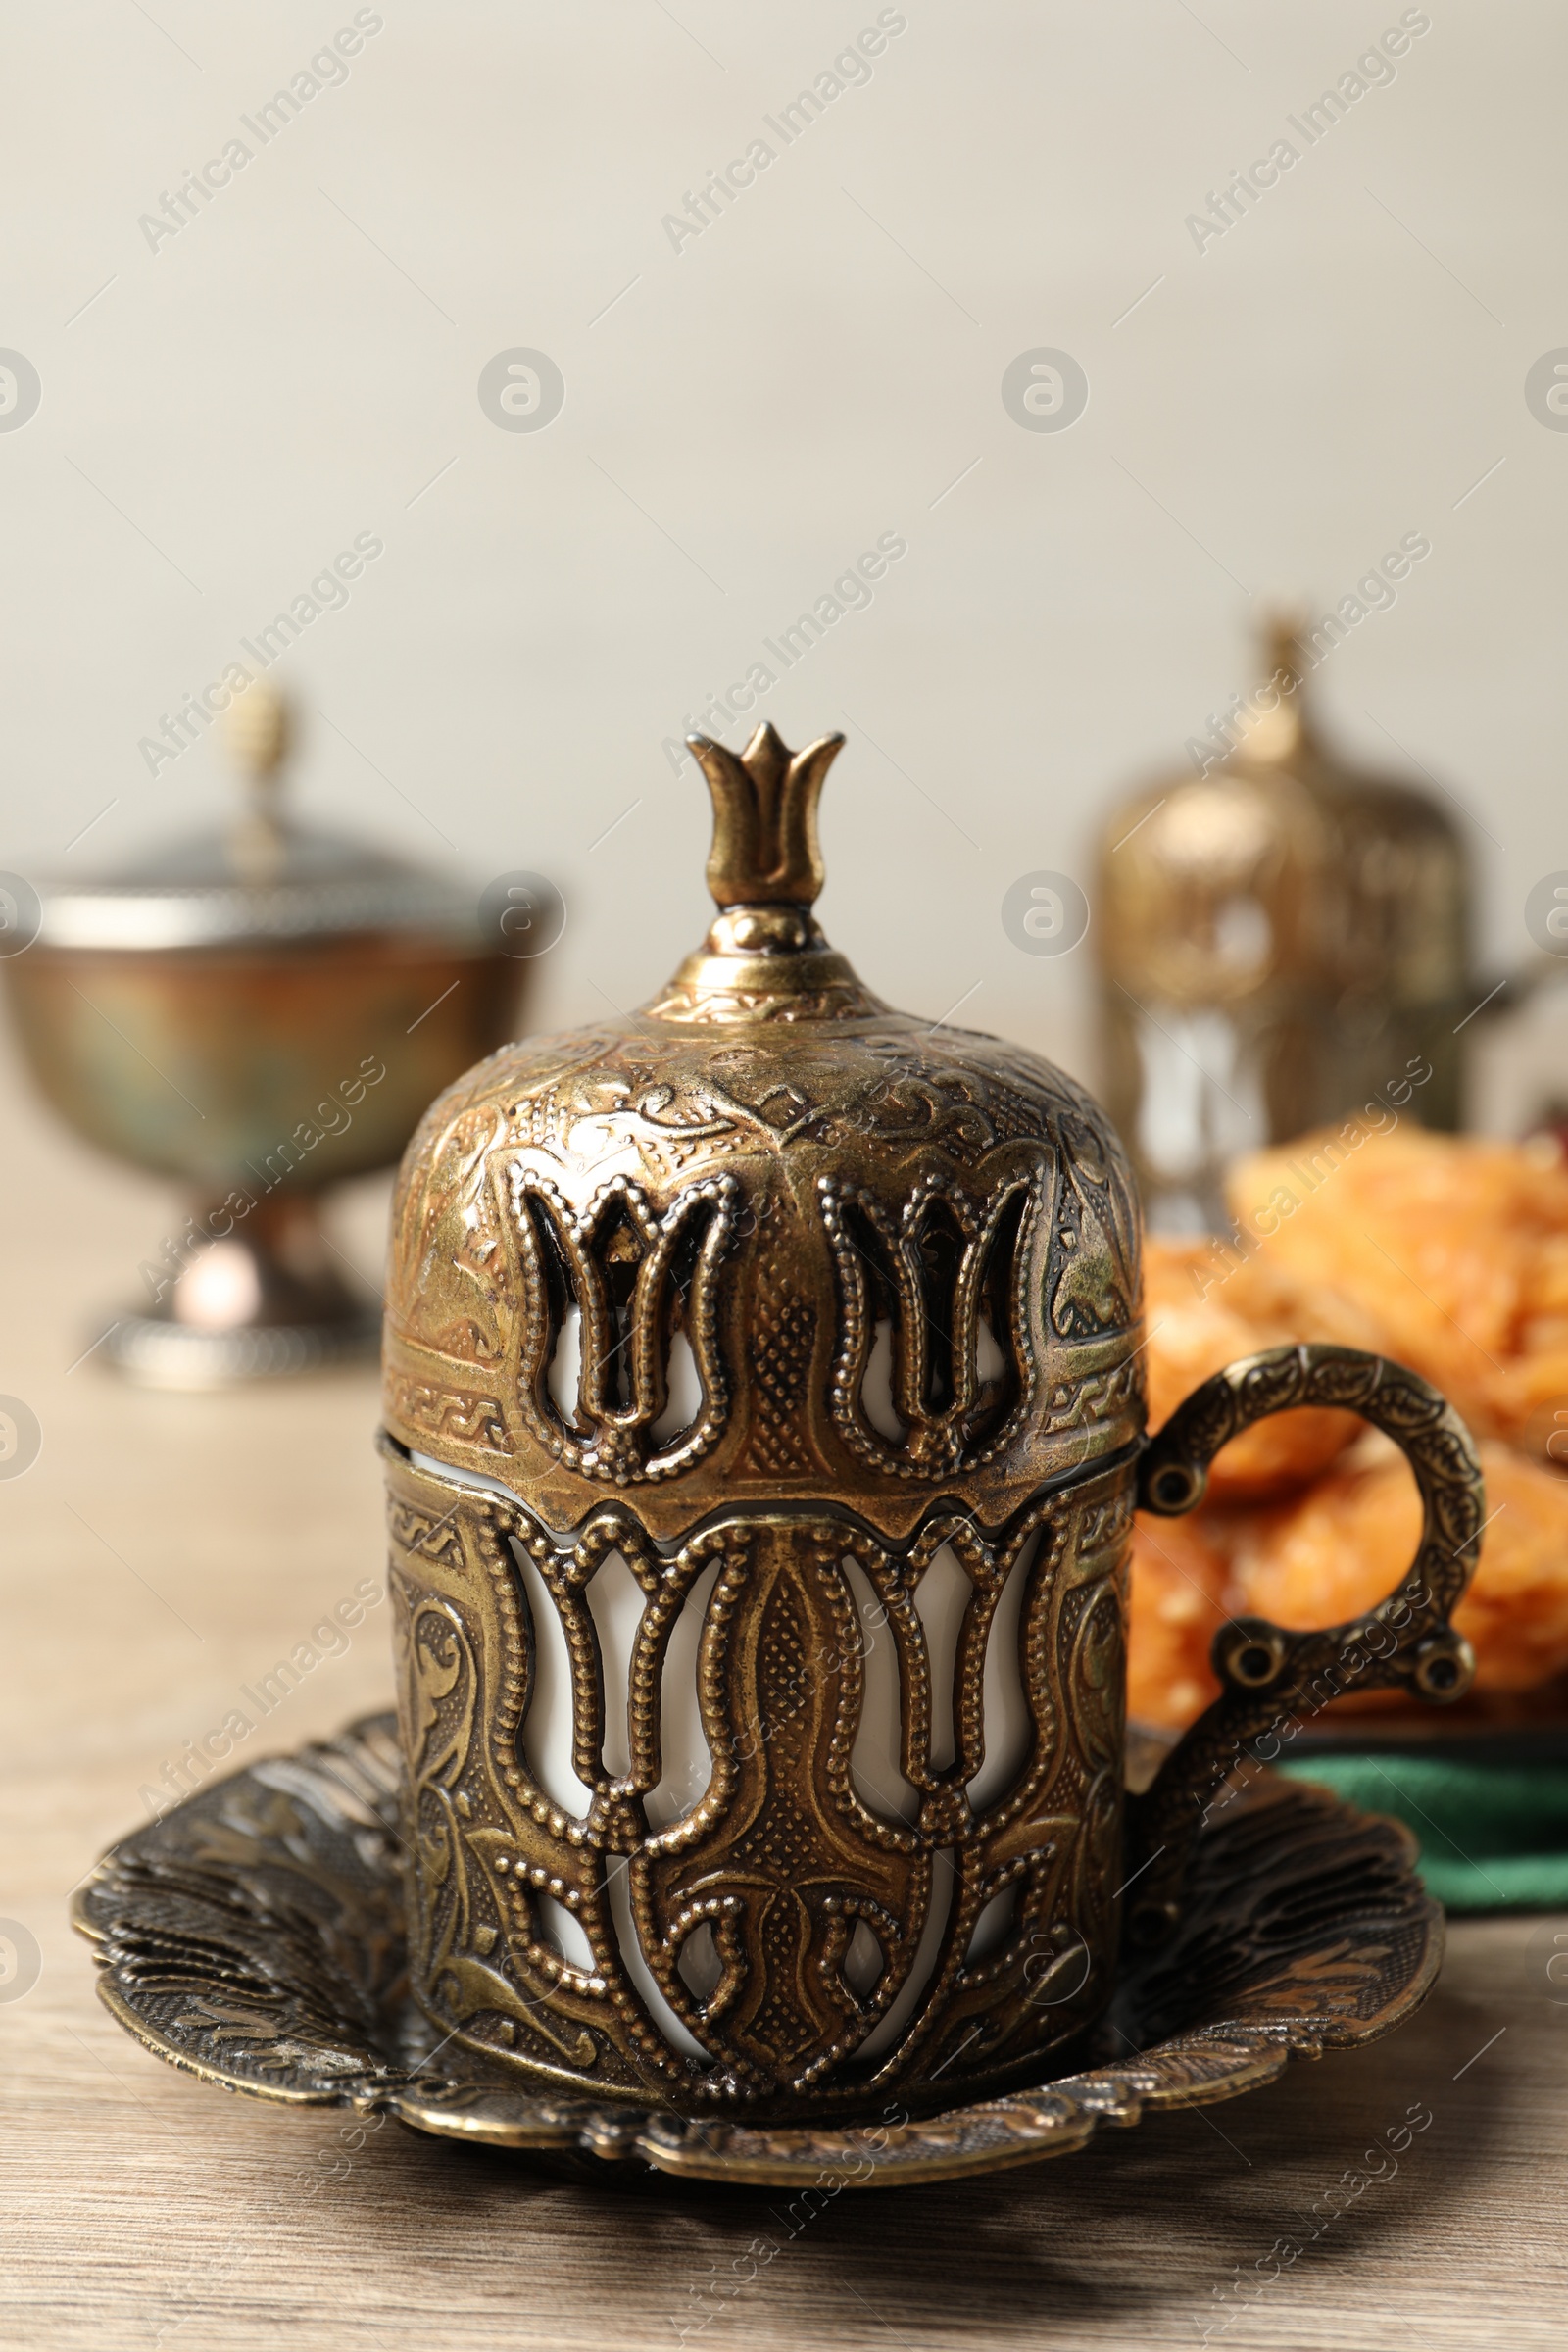 Photo of Tea and baklava dessert served in vintage tea set on wooden table, closeup